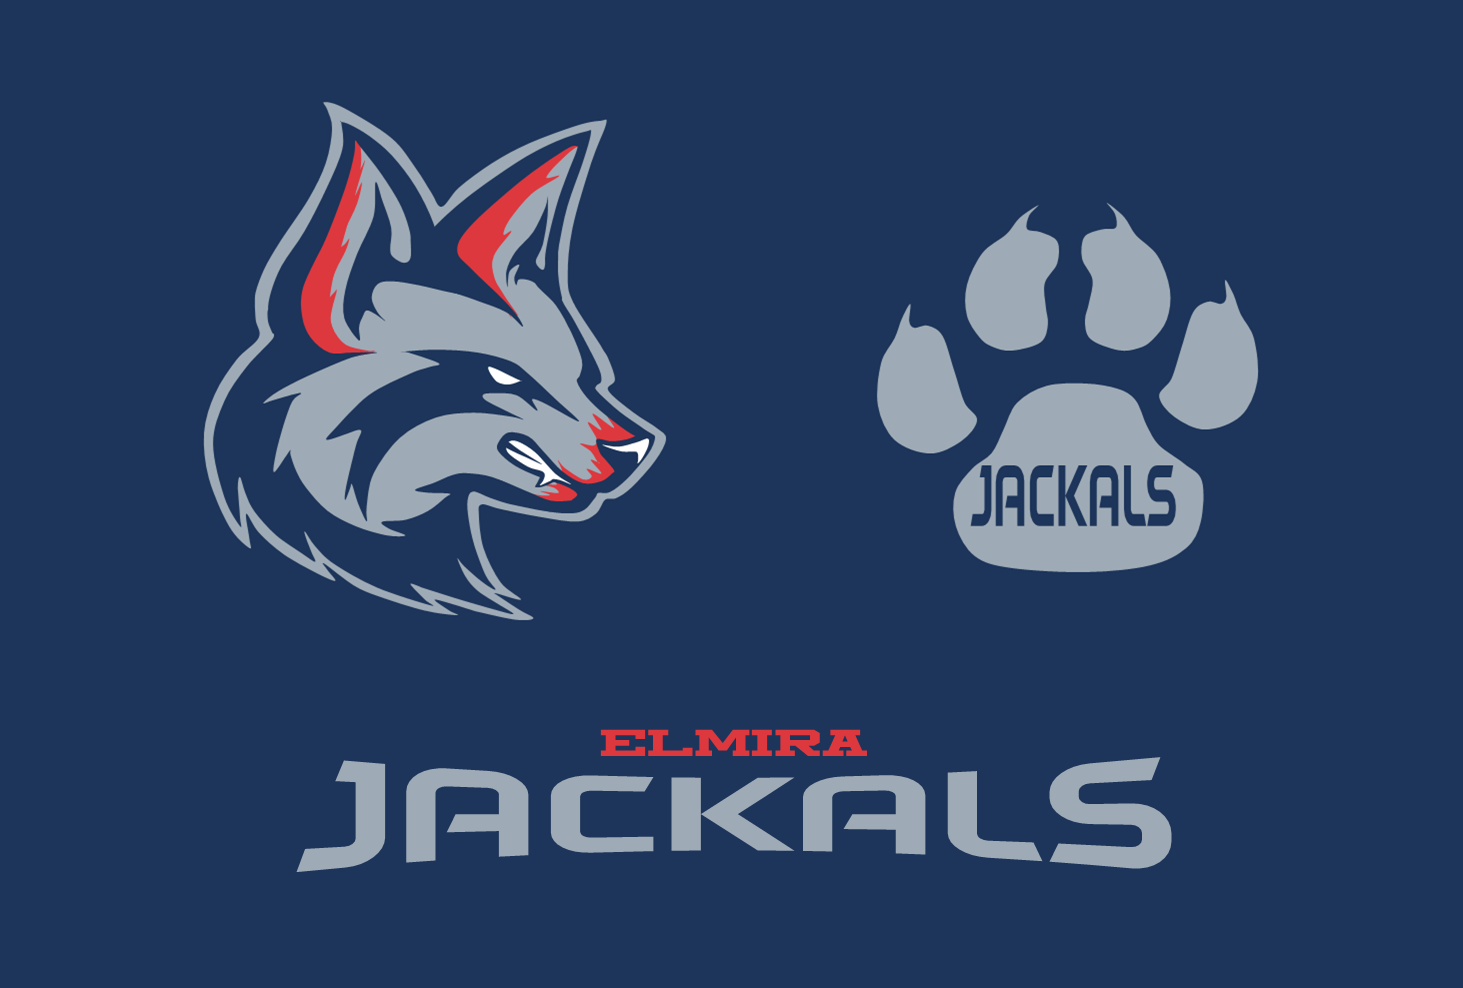 Jackal Logo - Elmira Jackals logo concept Creamer's Sports